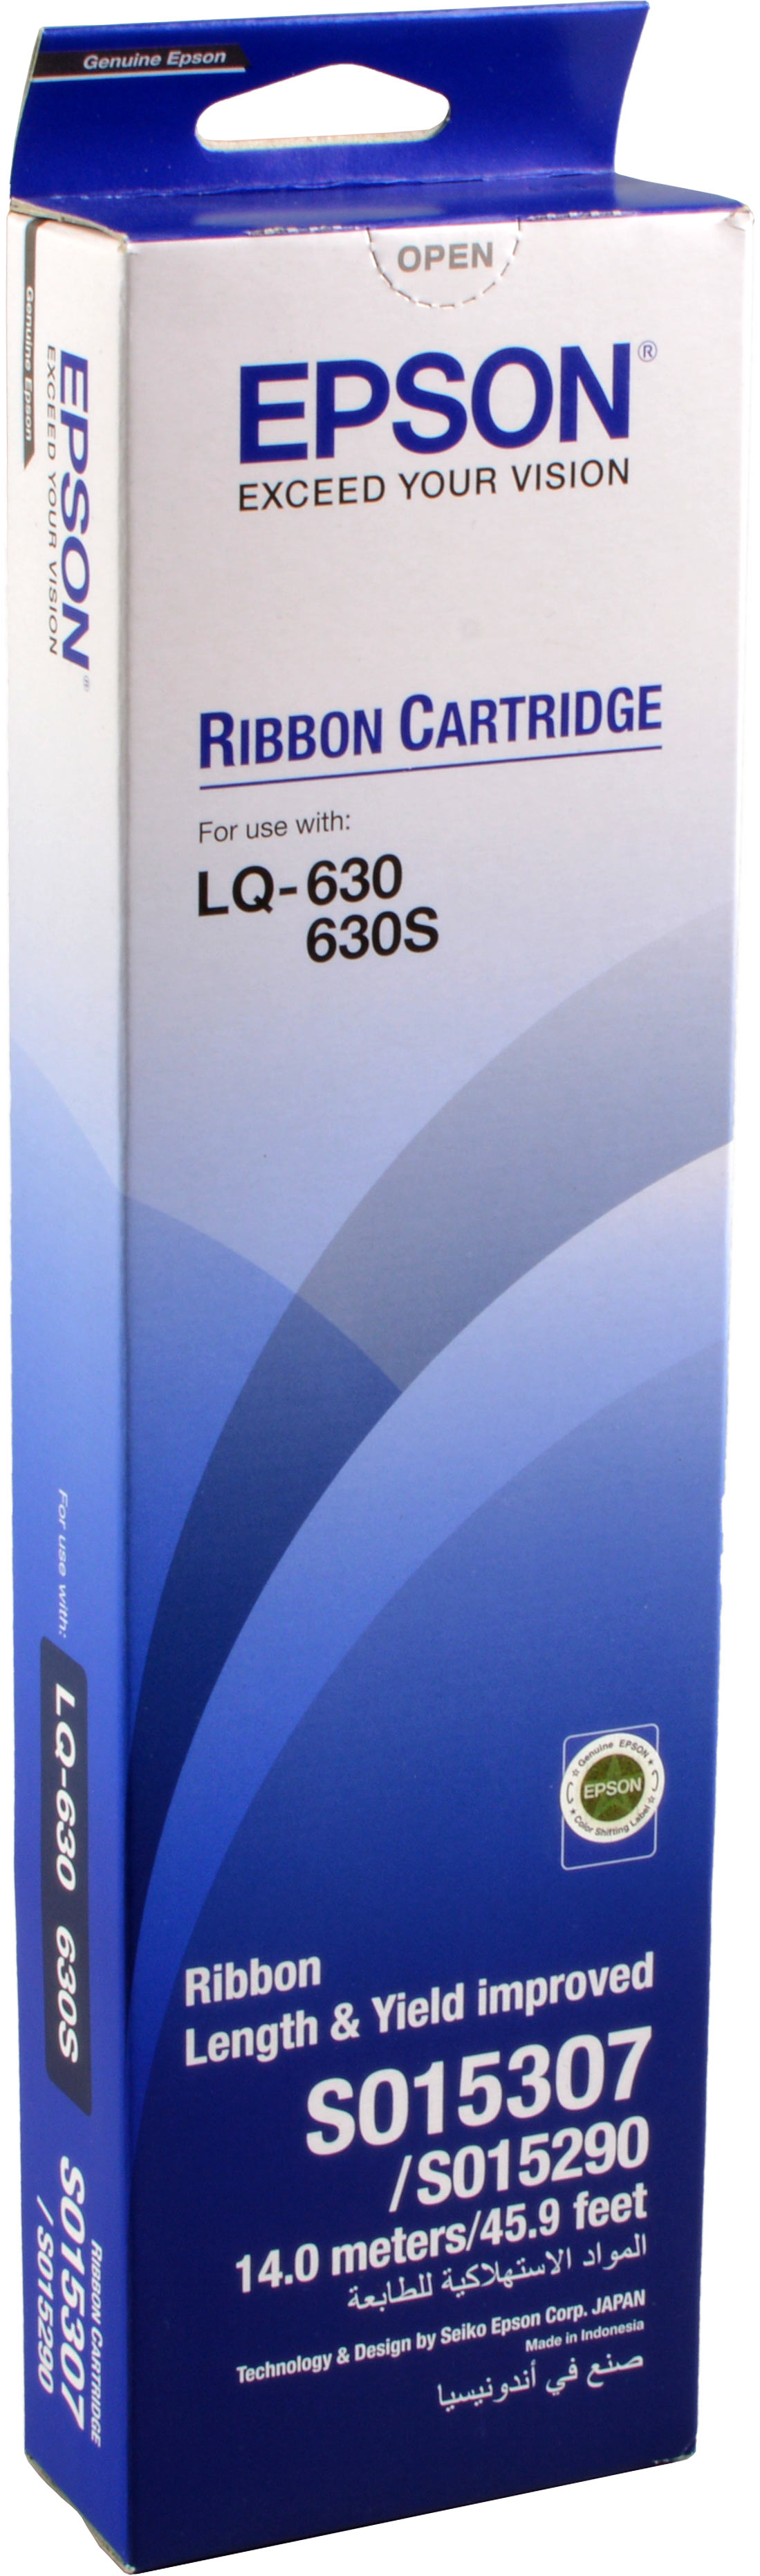 Epson Originalband LQ 630  schwarz  C13S015307